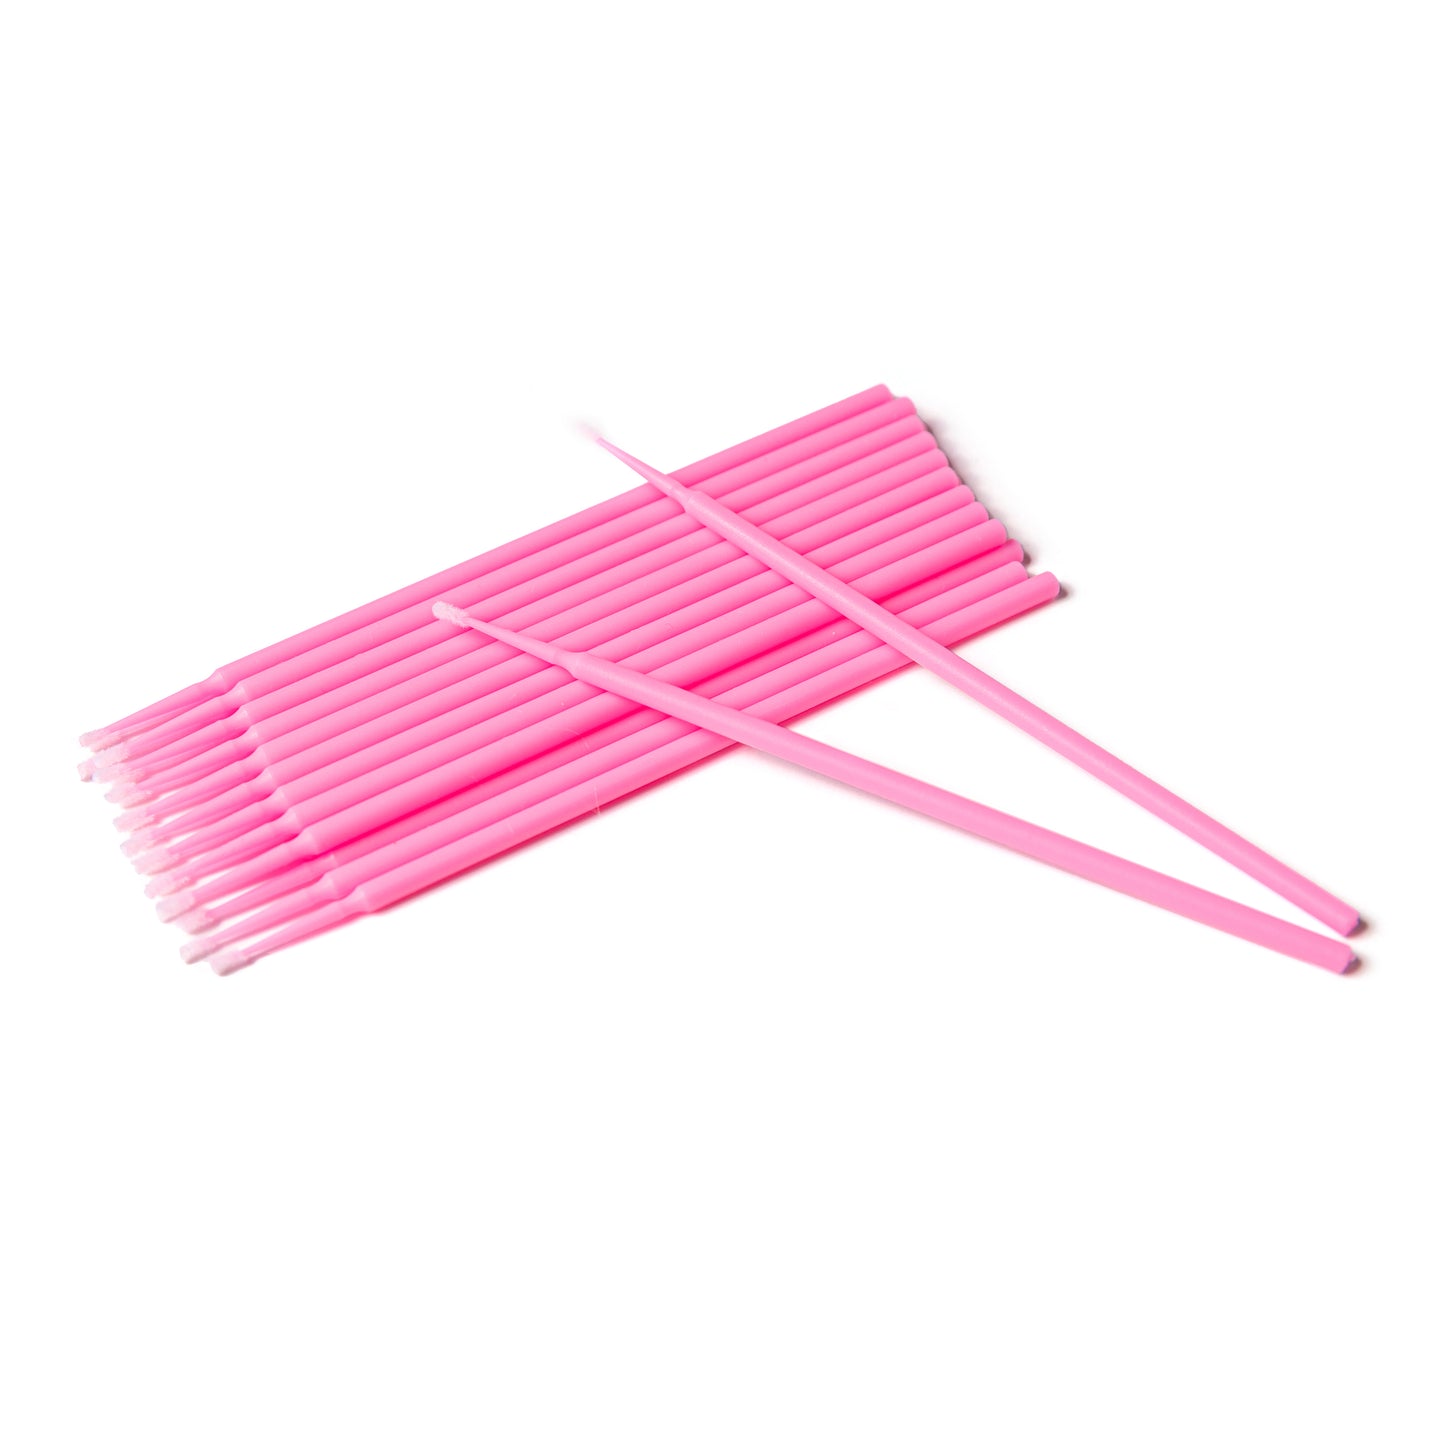 END OF YEAR SALE- 4$ Pink Micro Brush Applicators